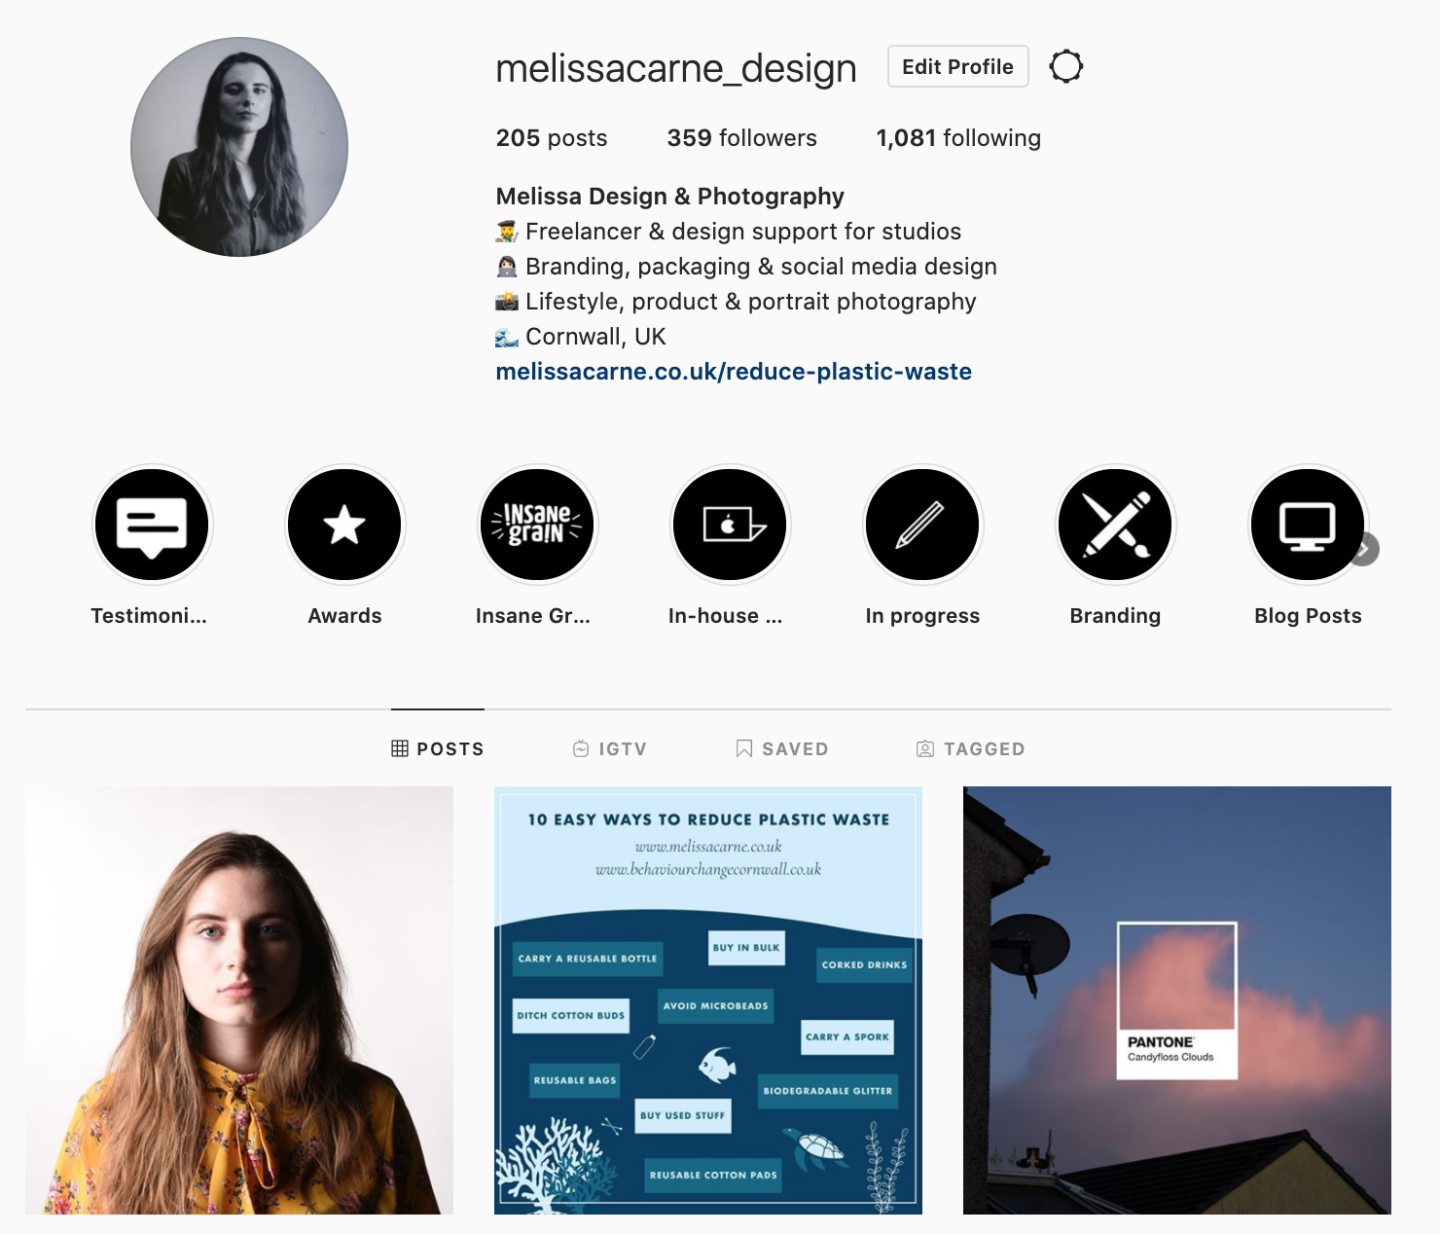 melissa carne freelance graphic designer instagram